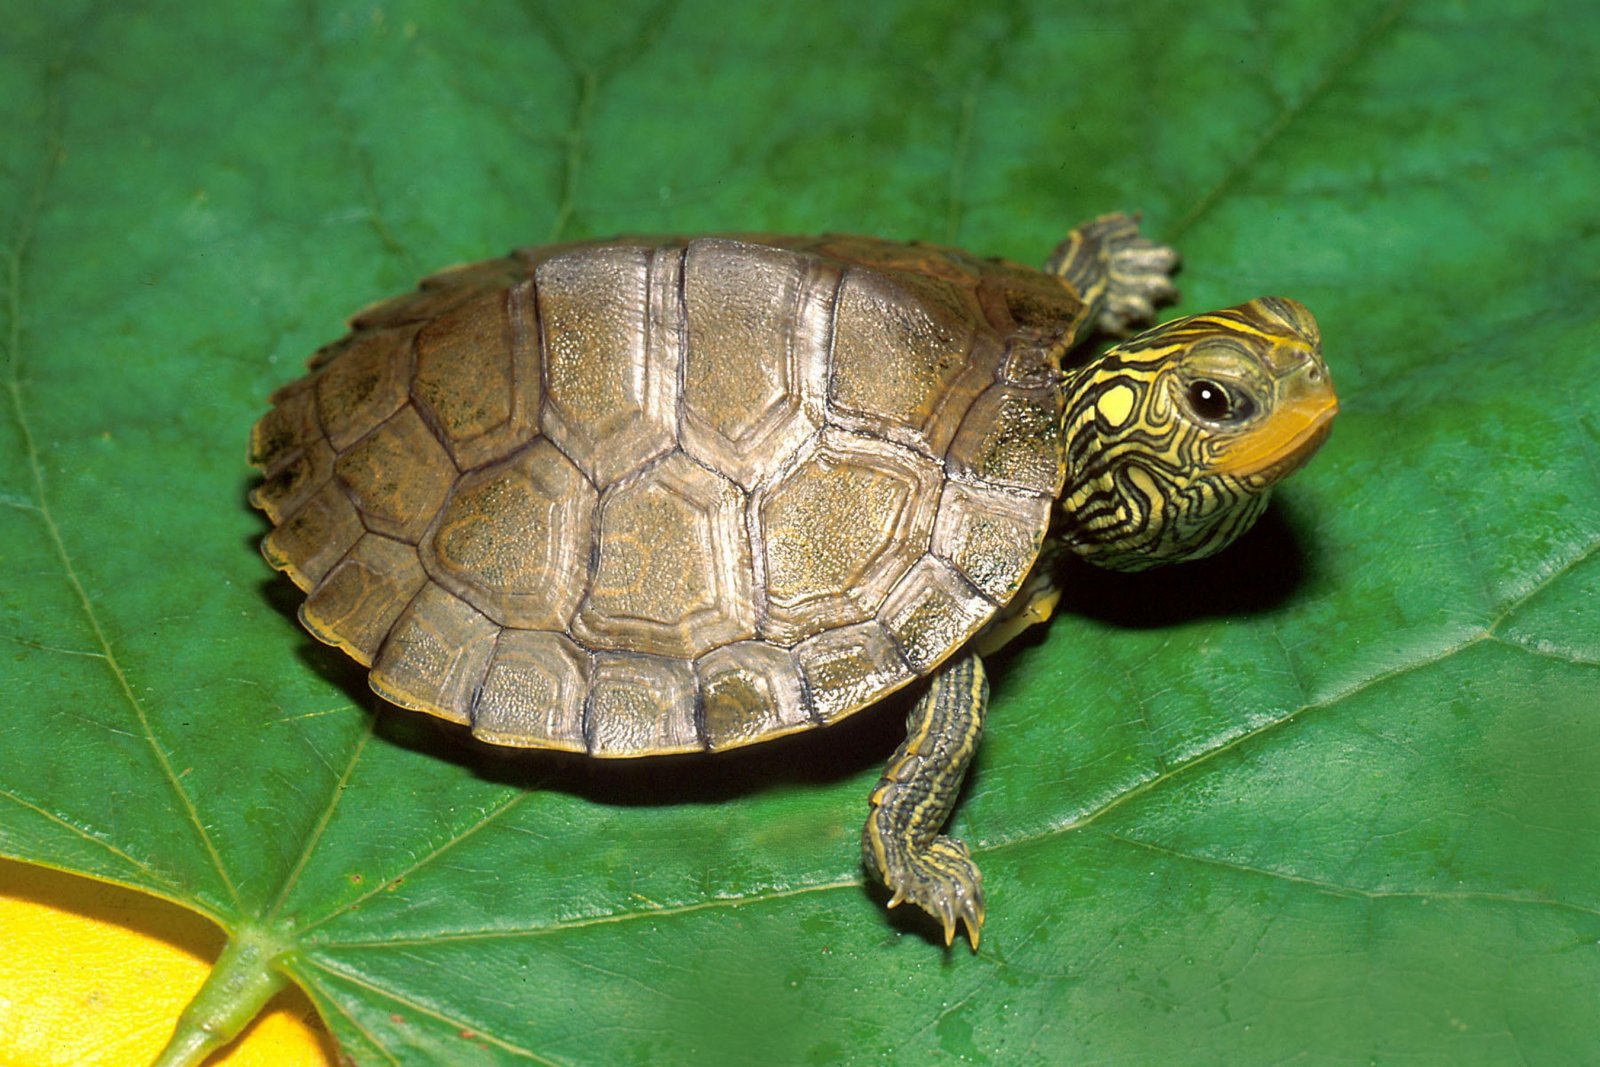 Jonathan as a turtle